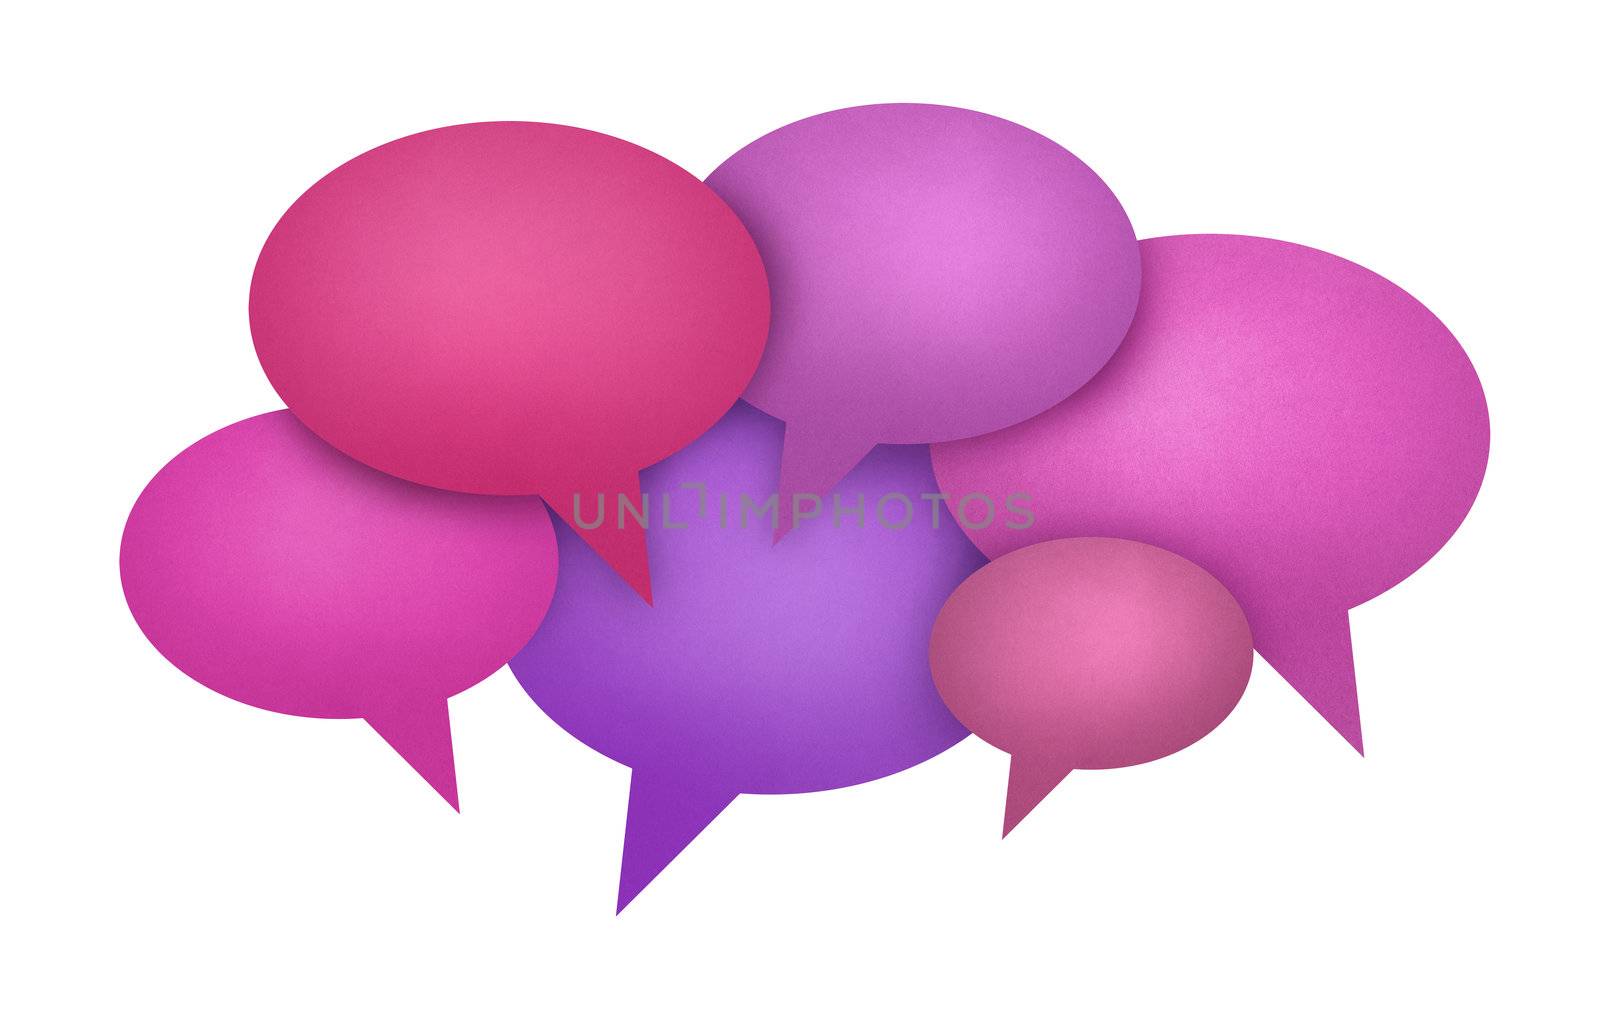 Speech Bubble Communication Concept by bloomua